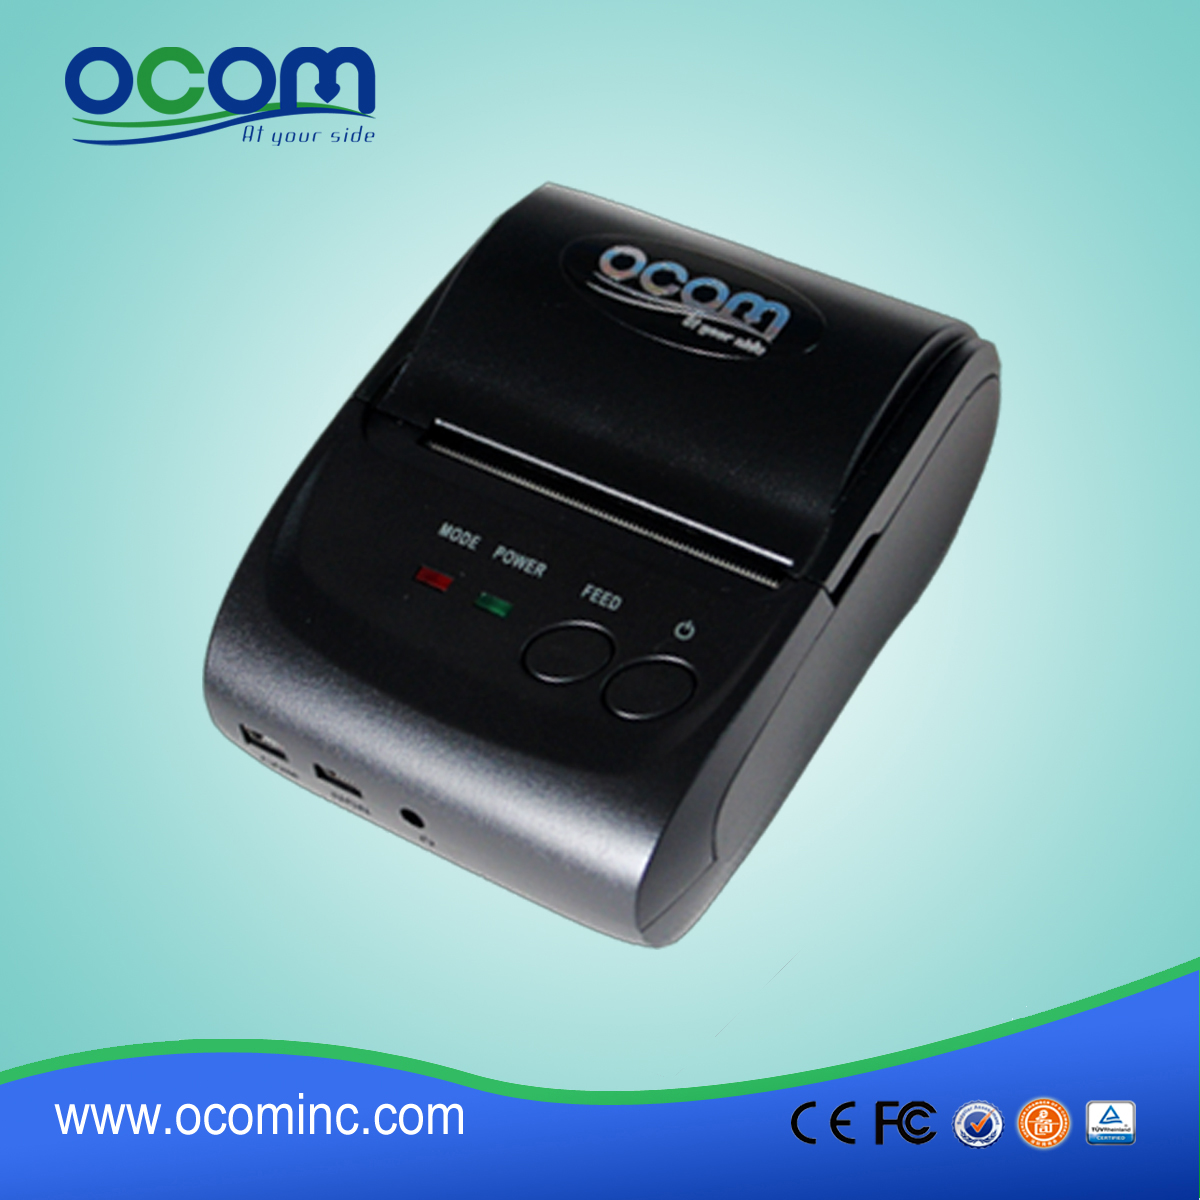 OCPP-M05: 2.015 mini impresora bluetooth usb androide, impresora térmica portátil